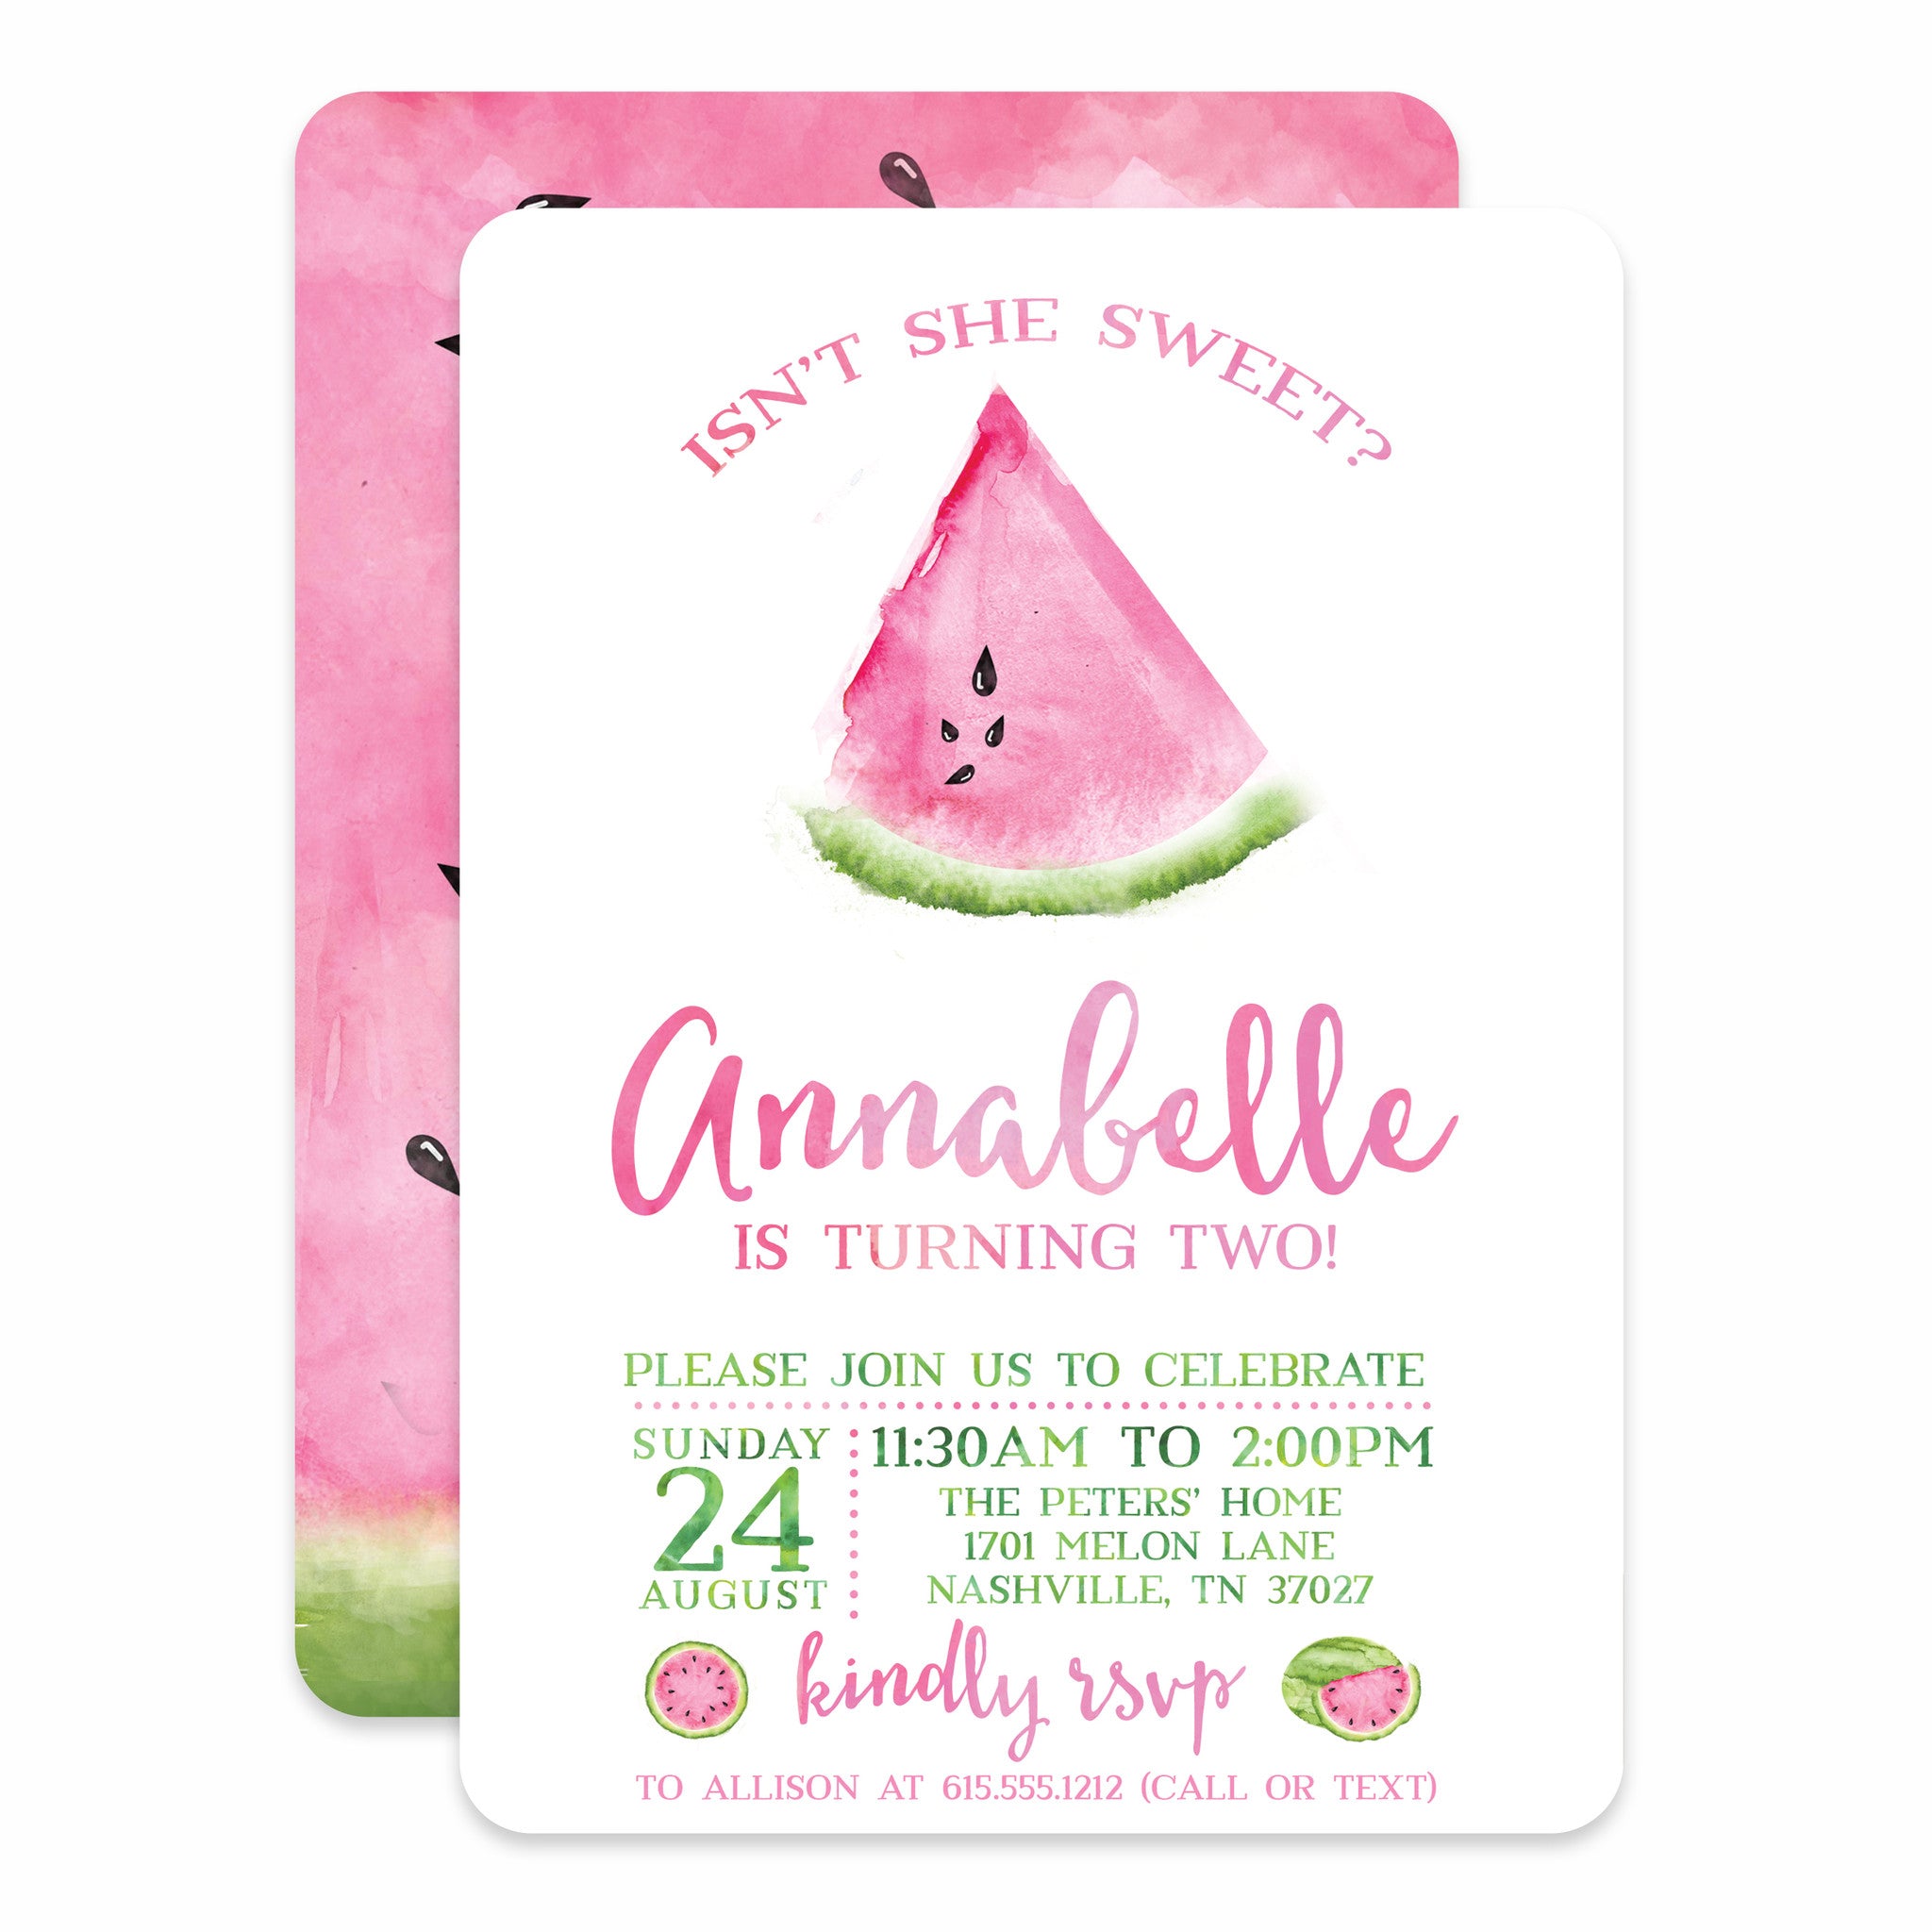 watermelon birthday invitation (printed)